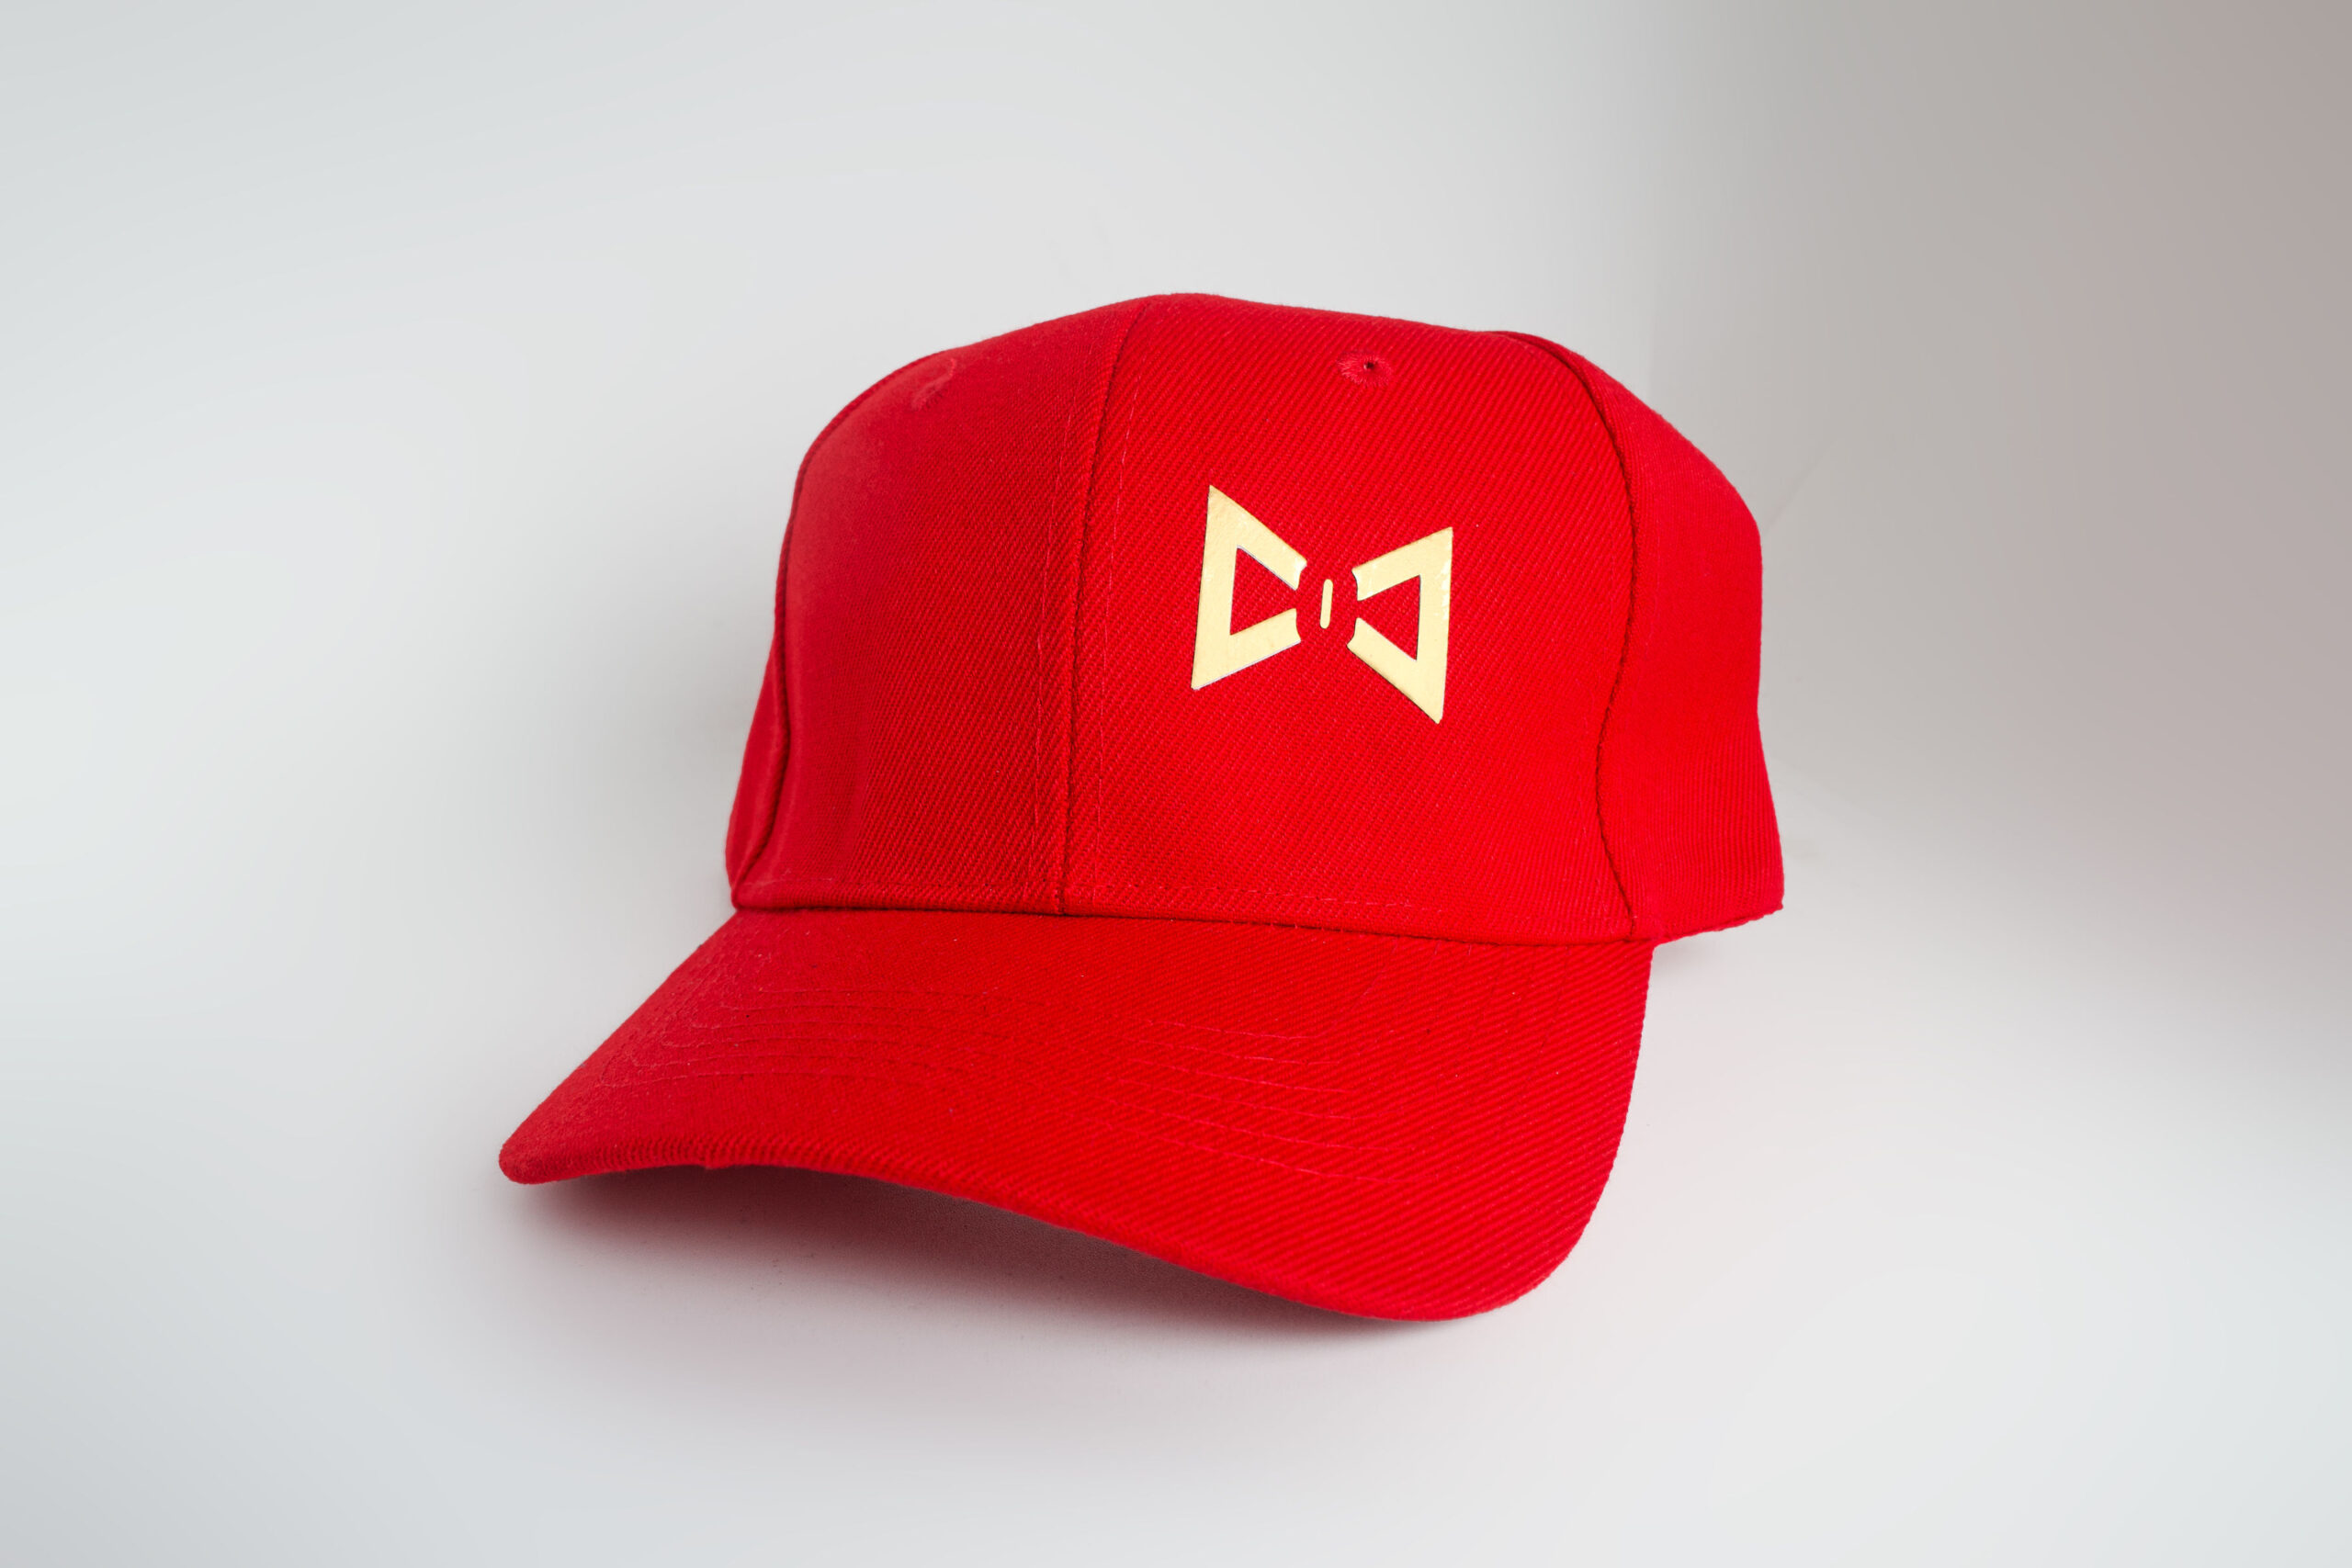 The-indulgence-Red-baseball-cap